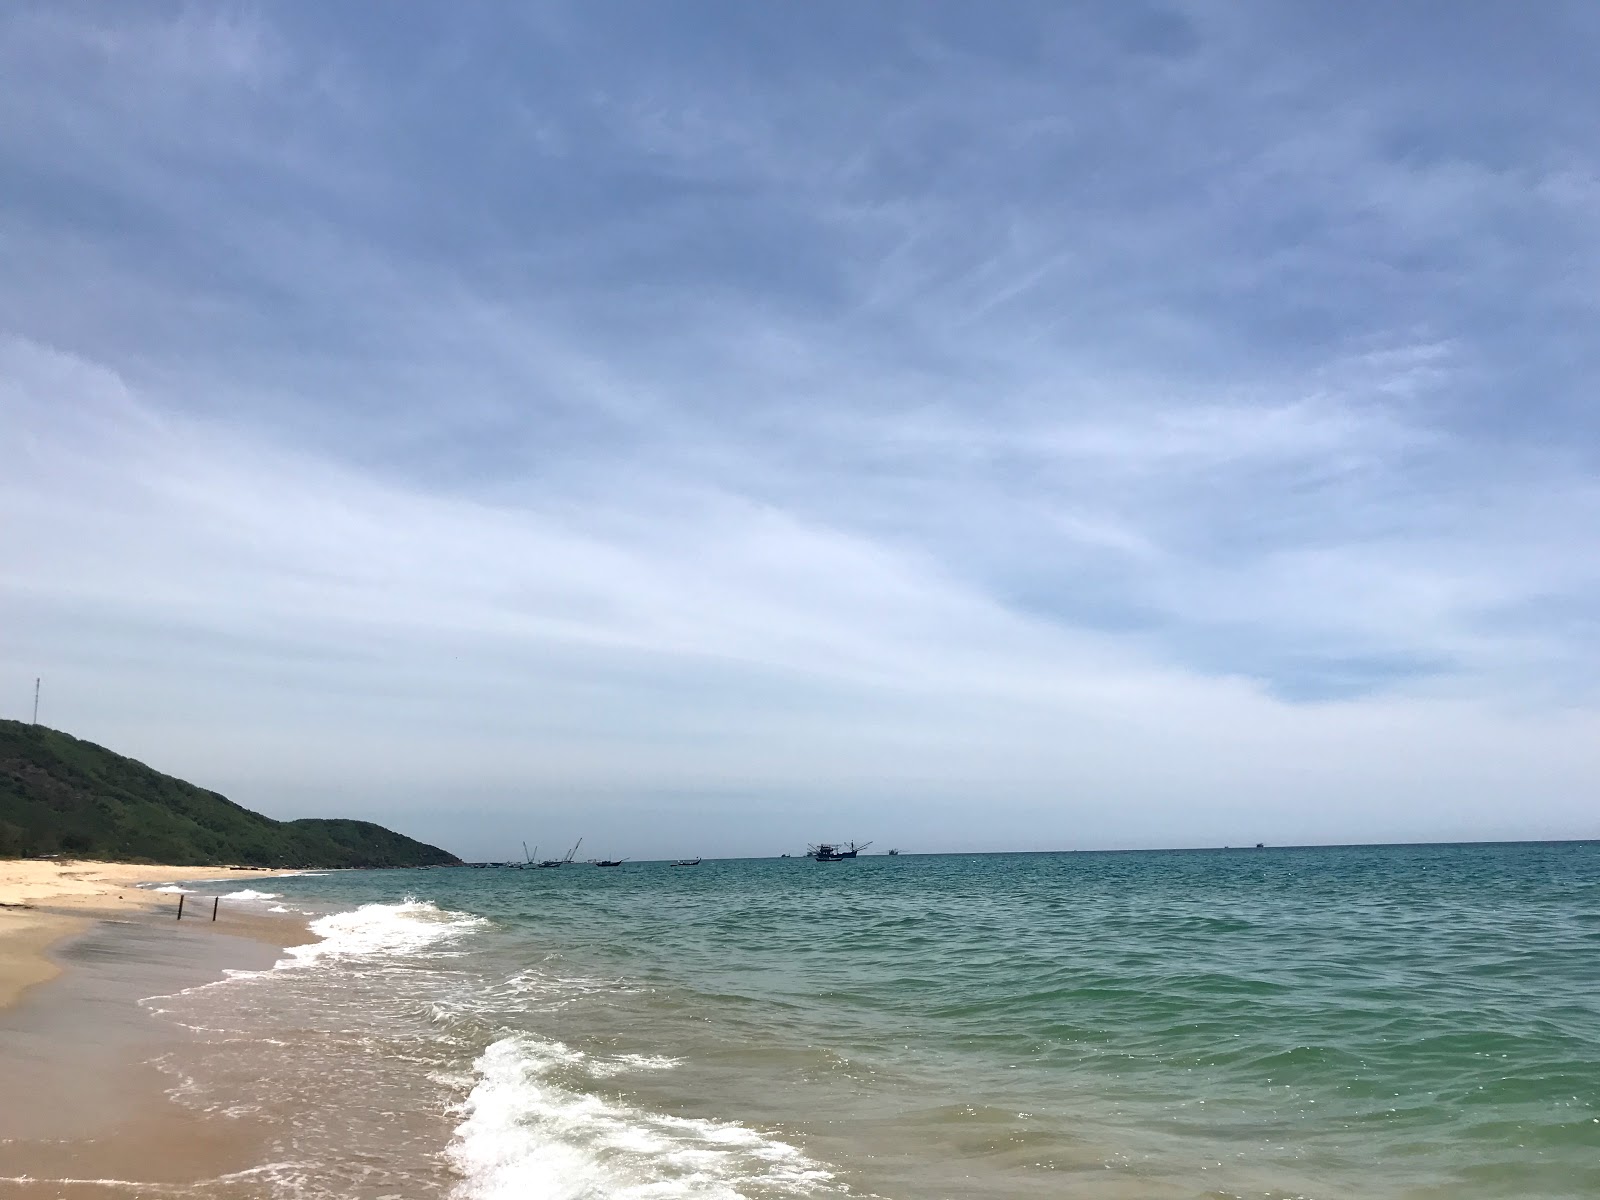 Foto di Sa Huynh Beach II ubicato in zona naturale